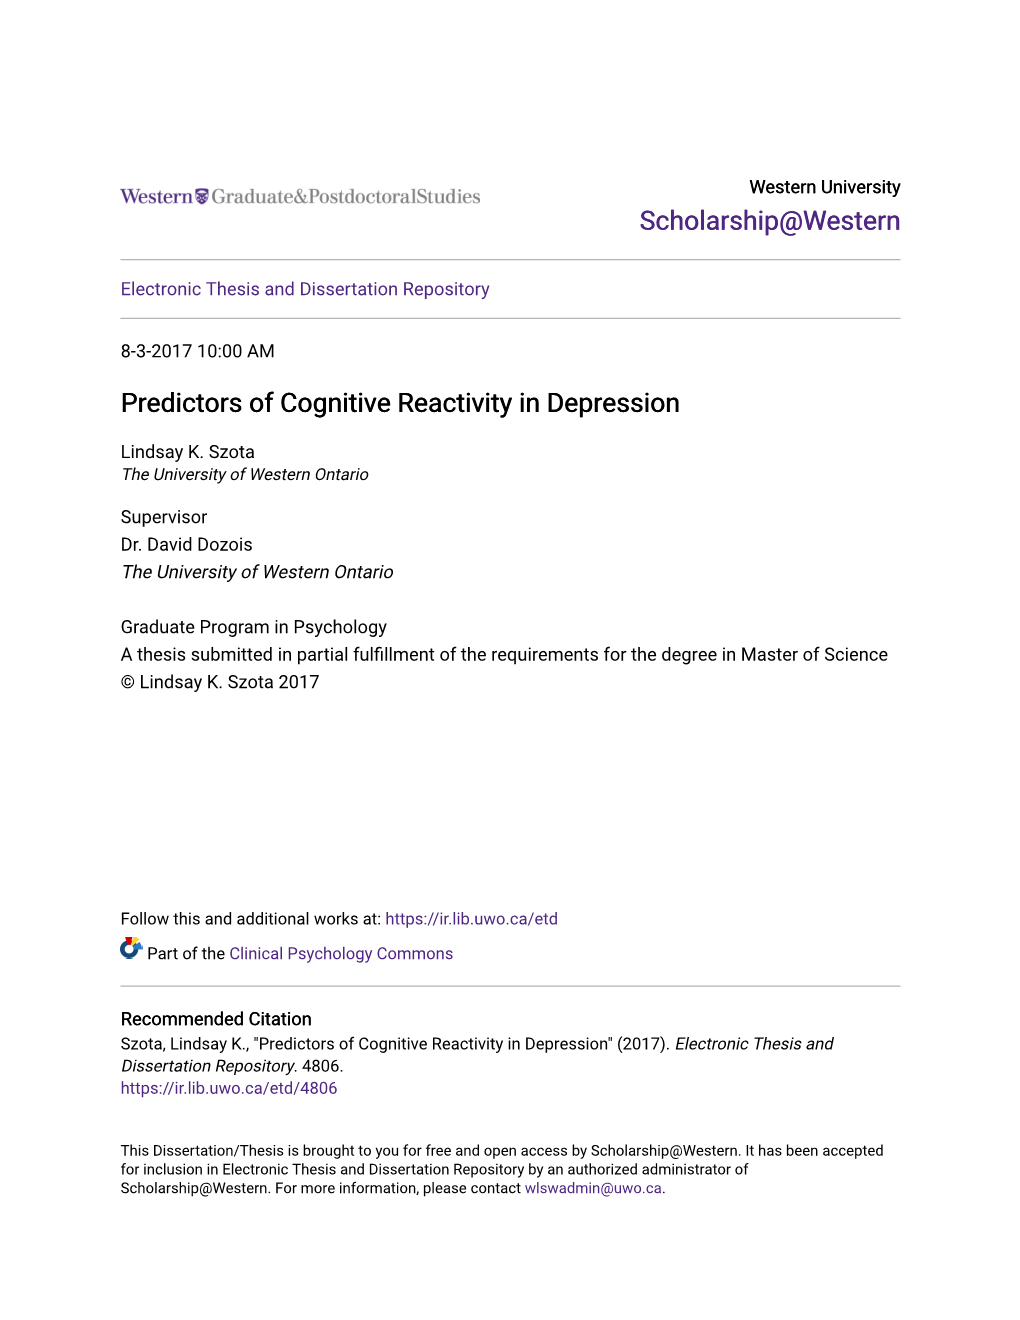 Predictors of Cognitive Reactivity in Depression